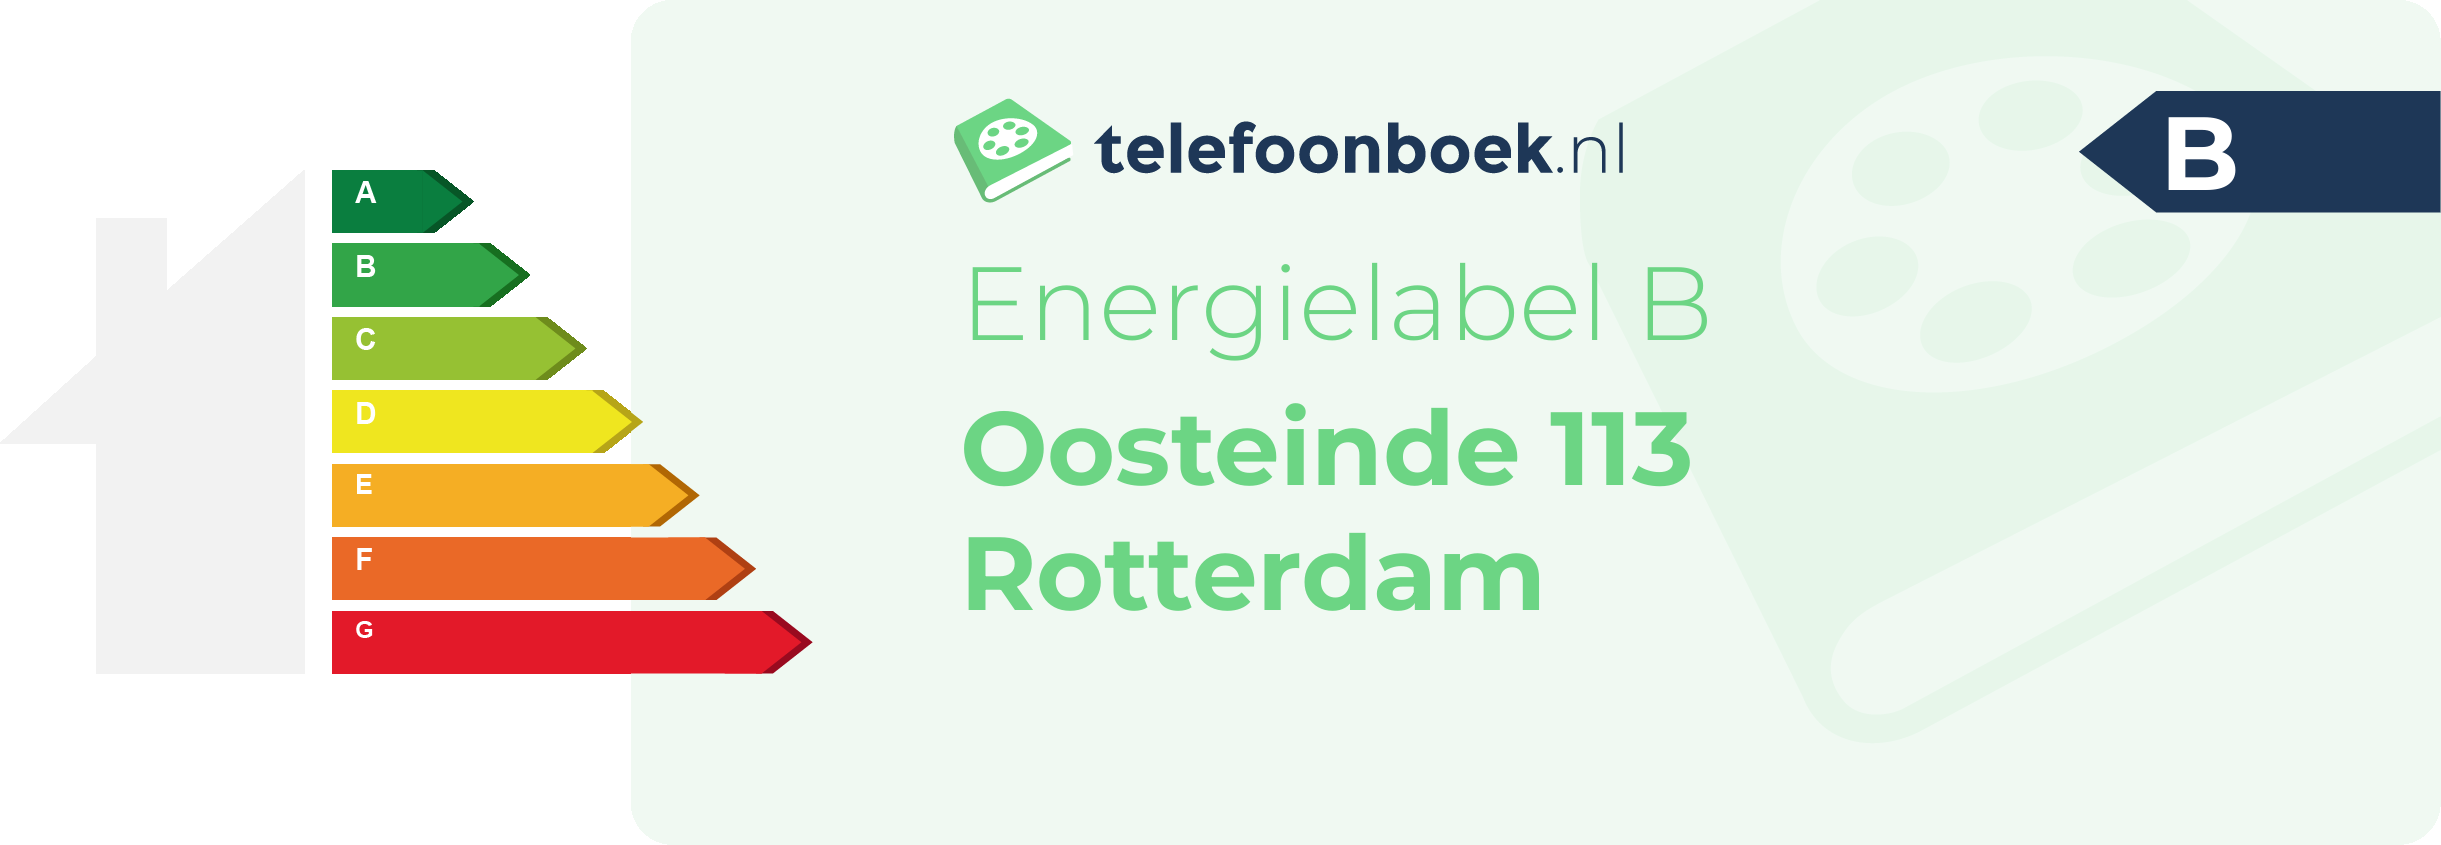 Energielabel Oosteinde 113 Rotterdam